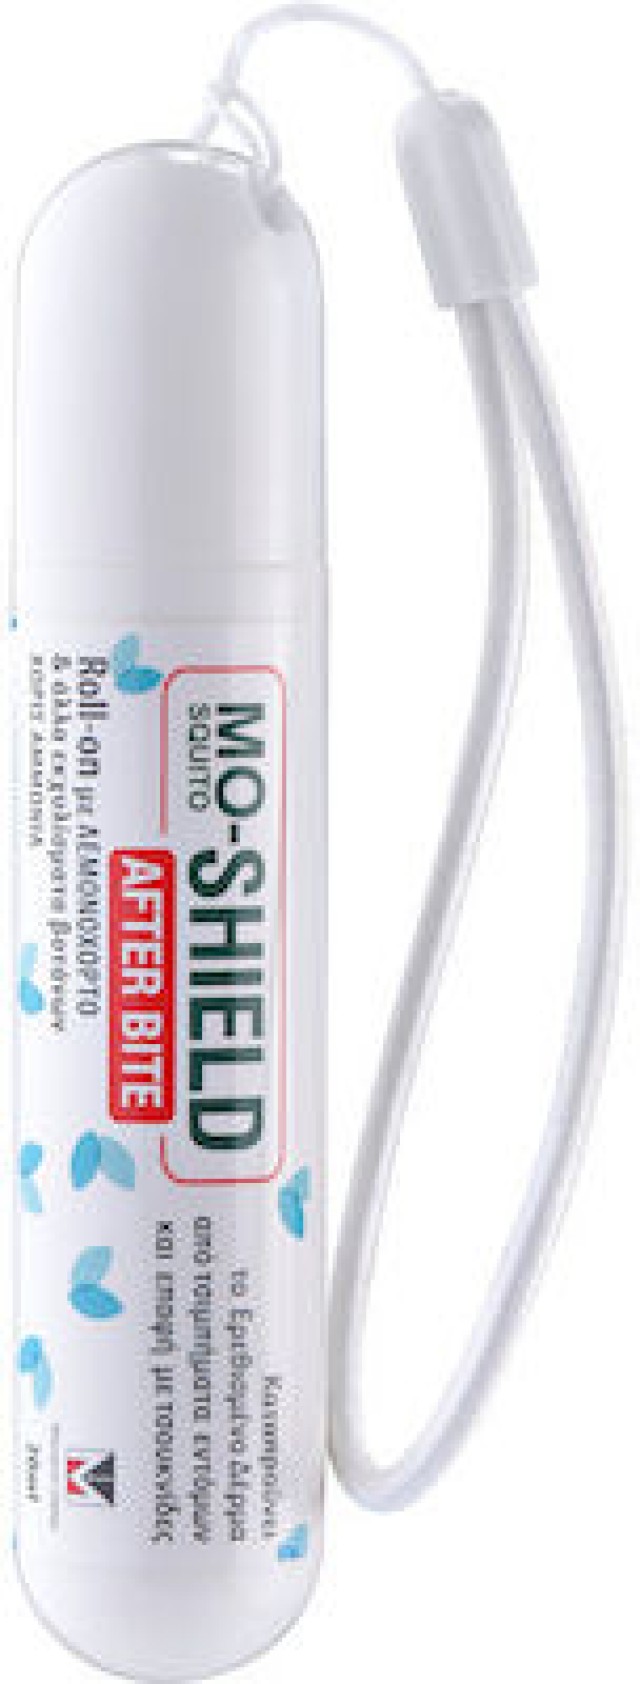 Mo Shield After Bite Roll On/Stick για Μετά το Τσίμπημα Κατάλληλο για Παιδιά, 20ml